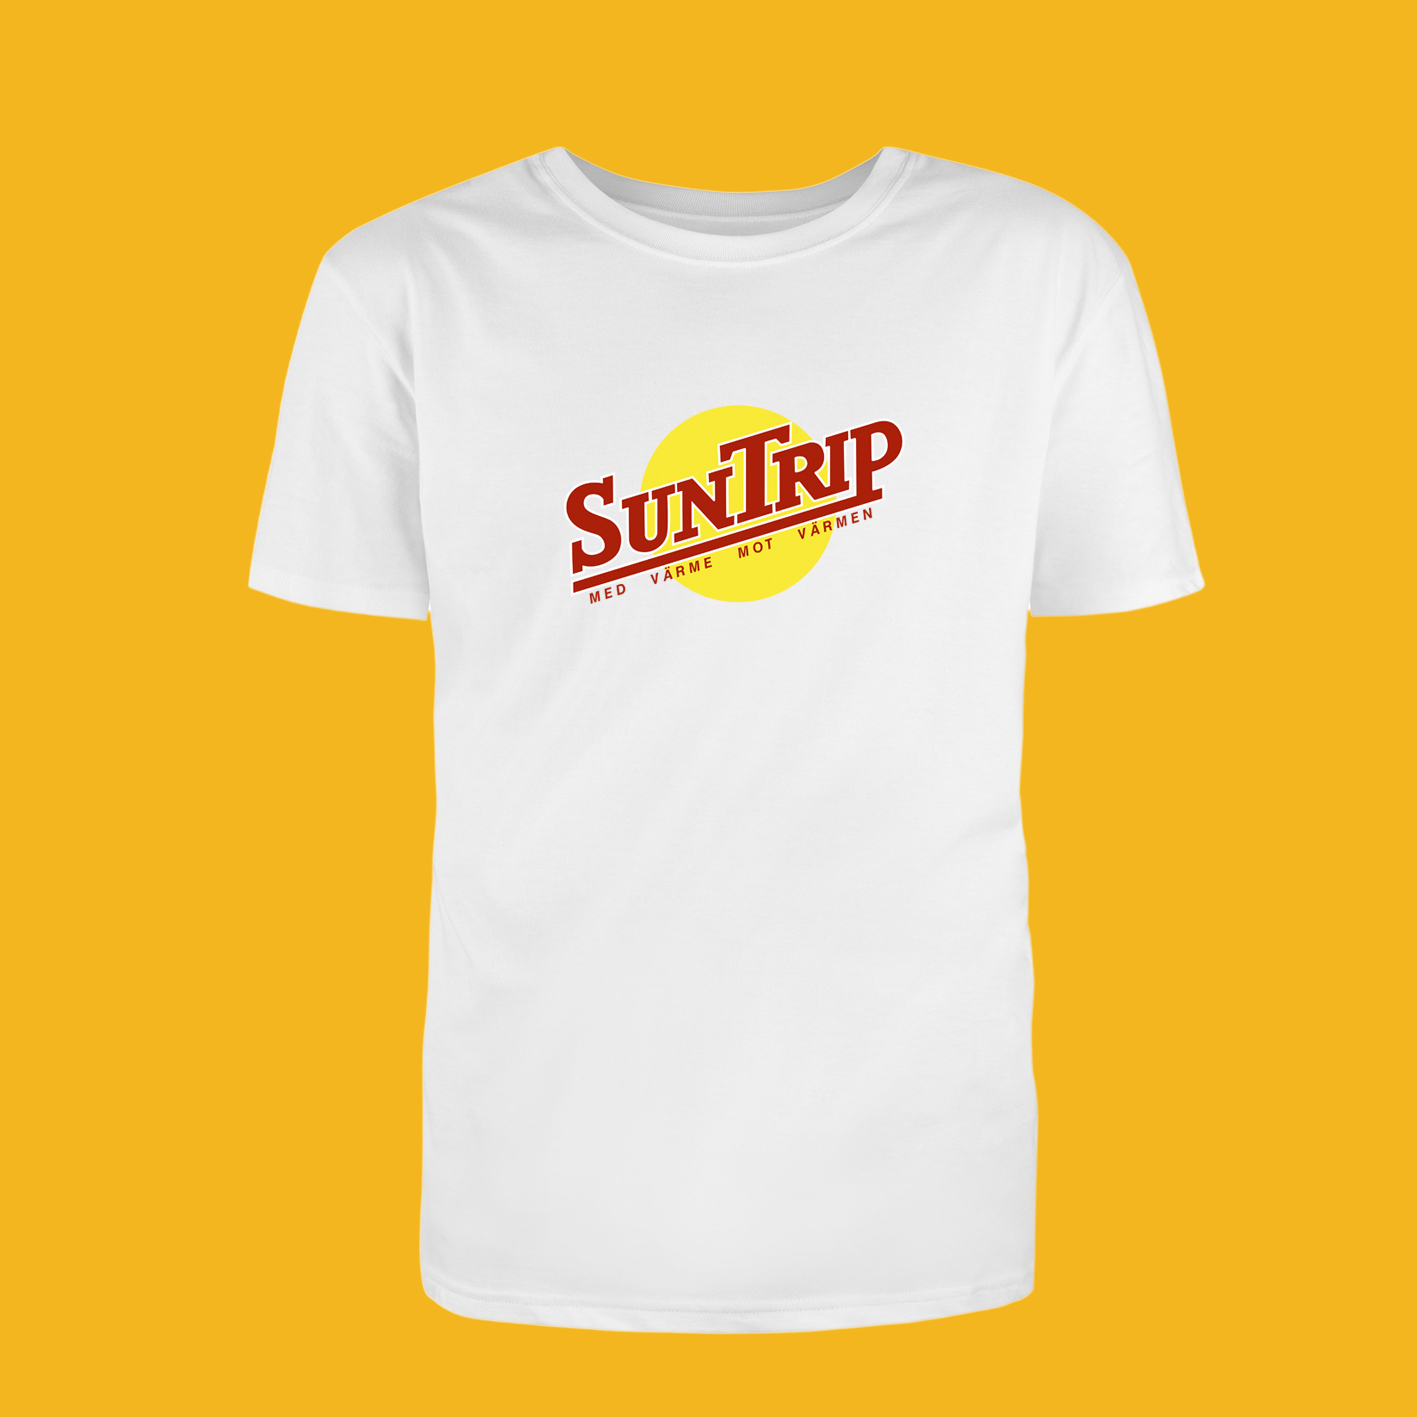 REA! - T-shirt - Suntrip